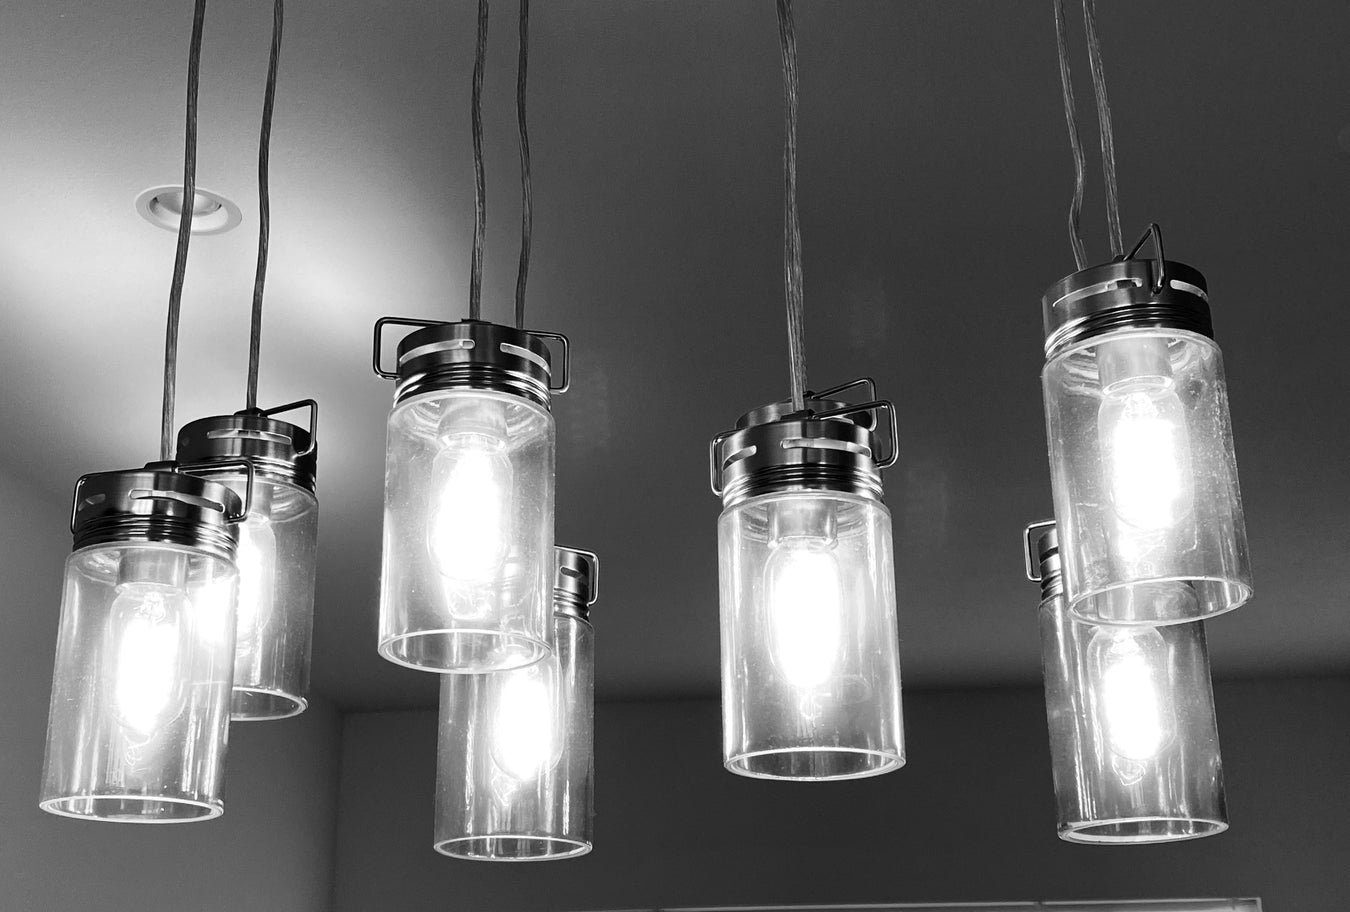 Hanging Modern Vintage Pendant Light of glass